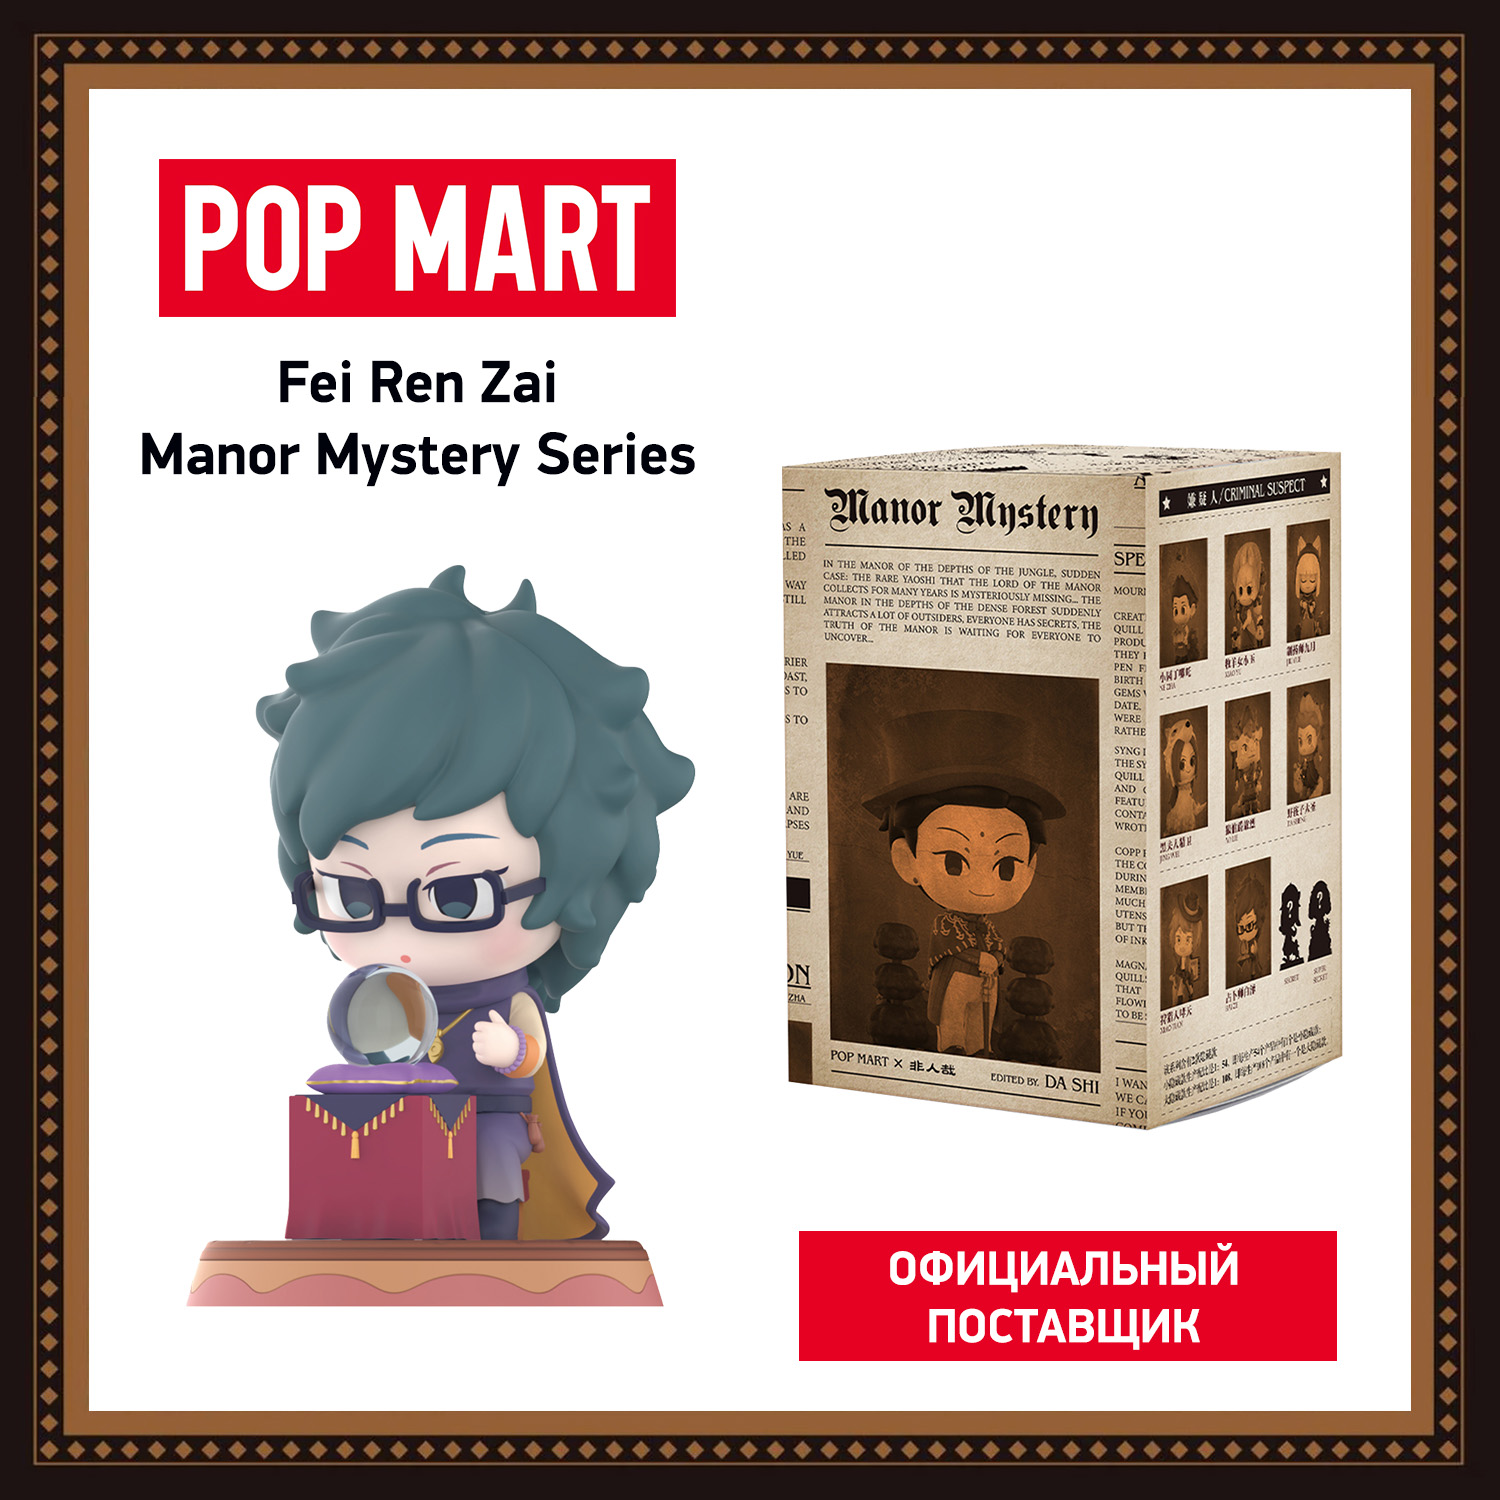 Коллекционная фигурка Pop Mart Fei Ren Zai Manor Mystery коллекционная фигурка pop mart duckyo friends wage earner